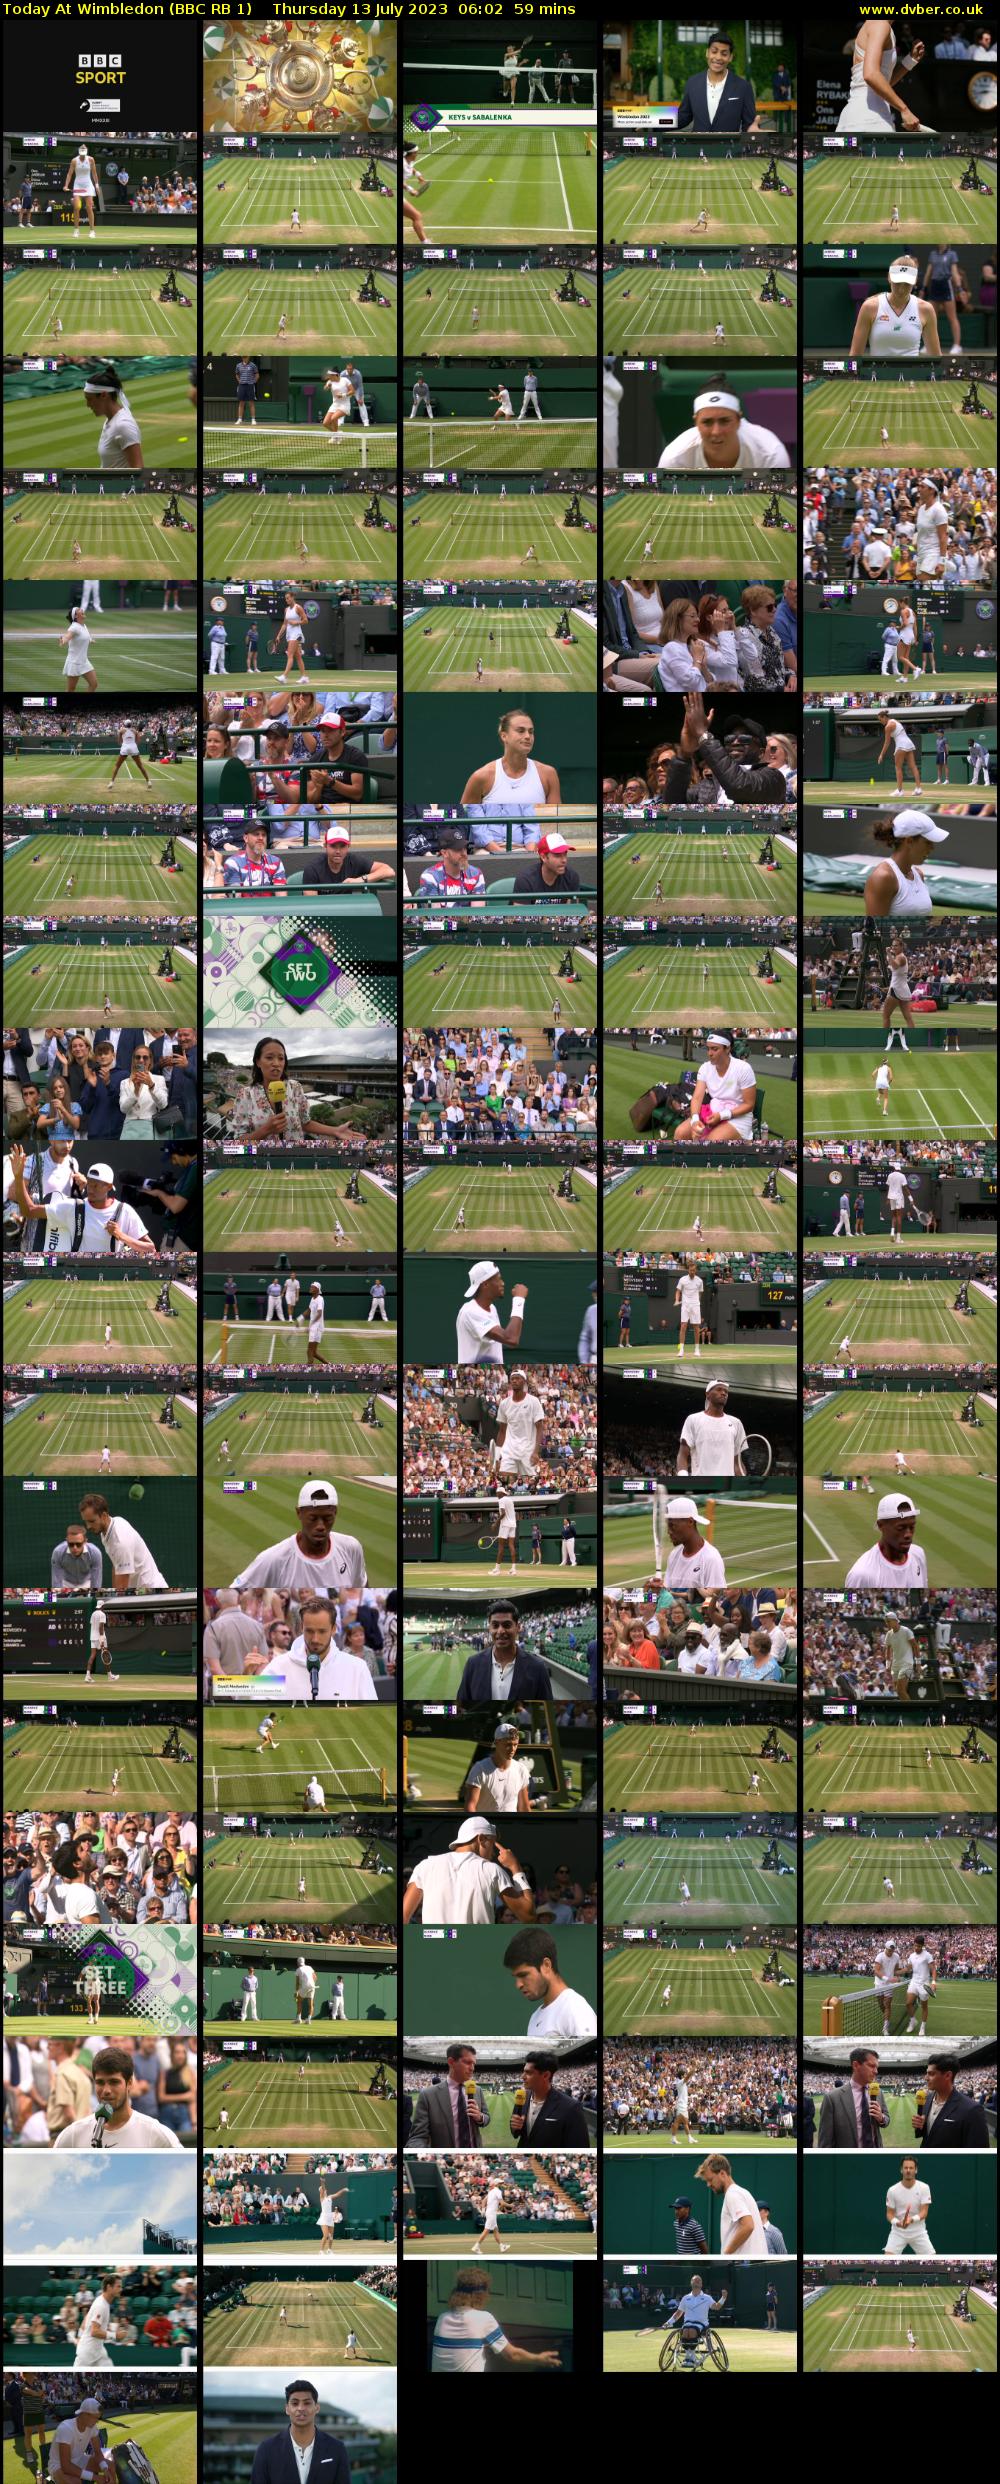 Today at Wimbledon (BBC RB 1) Thursday 13 July 2023 06:02 - 07:01